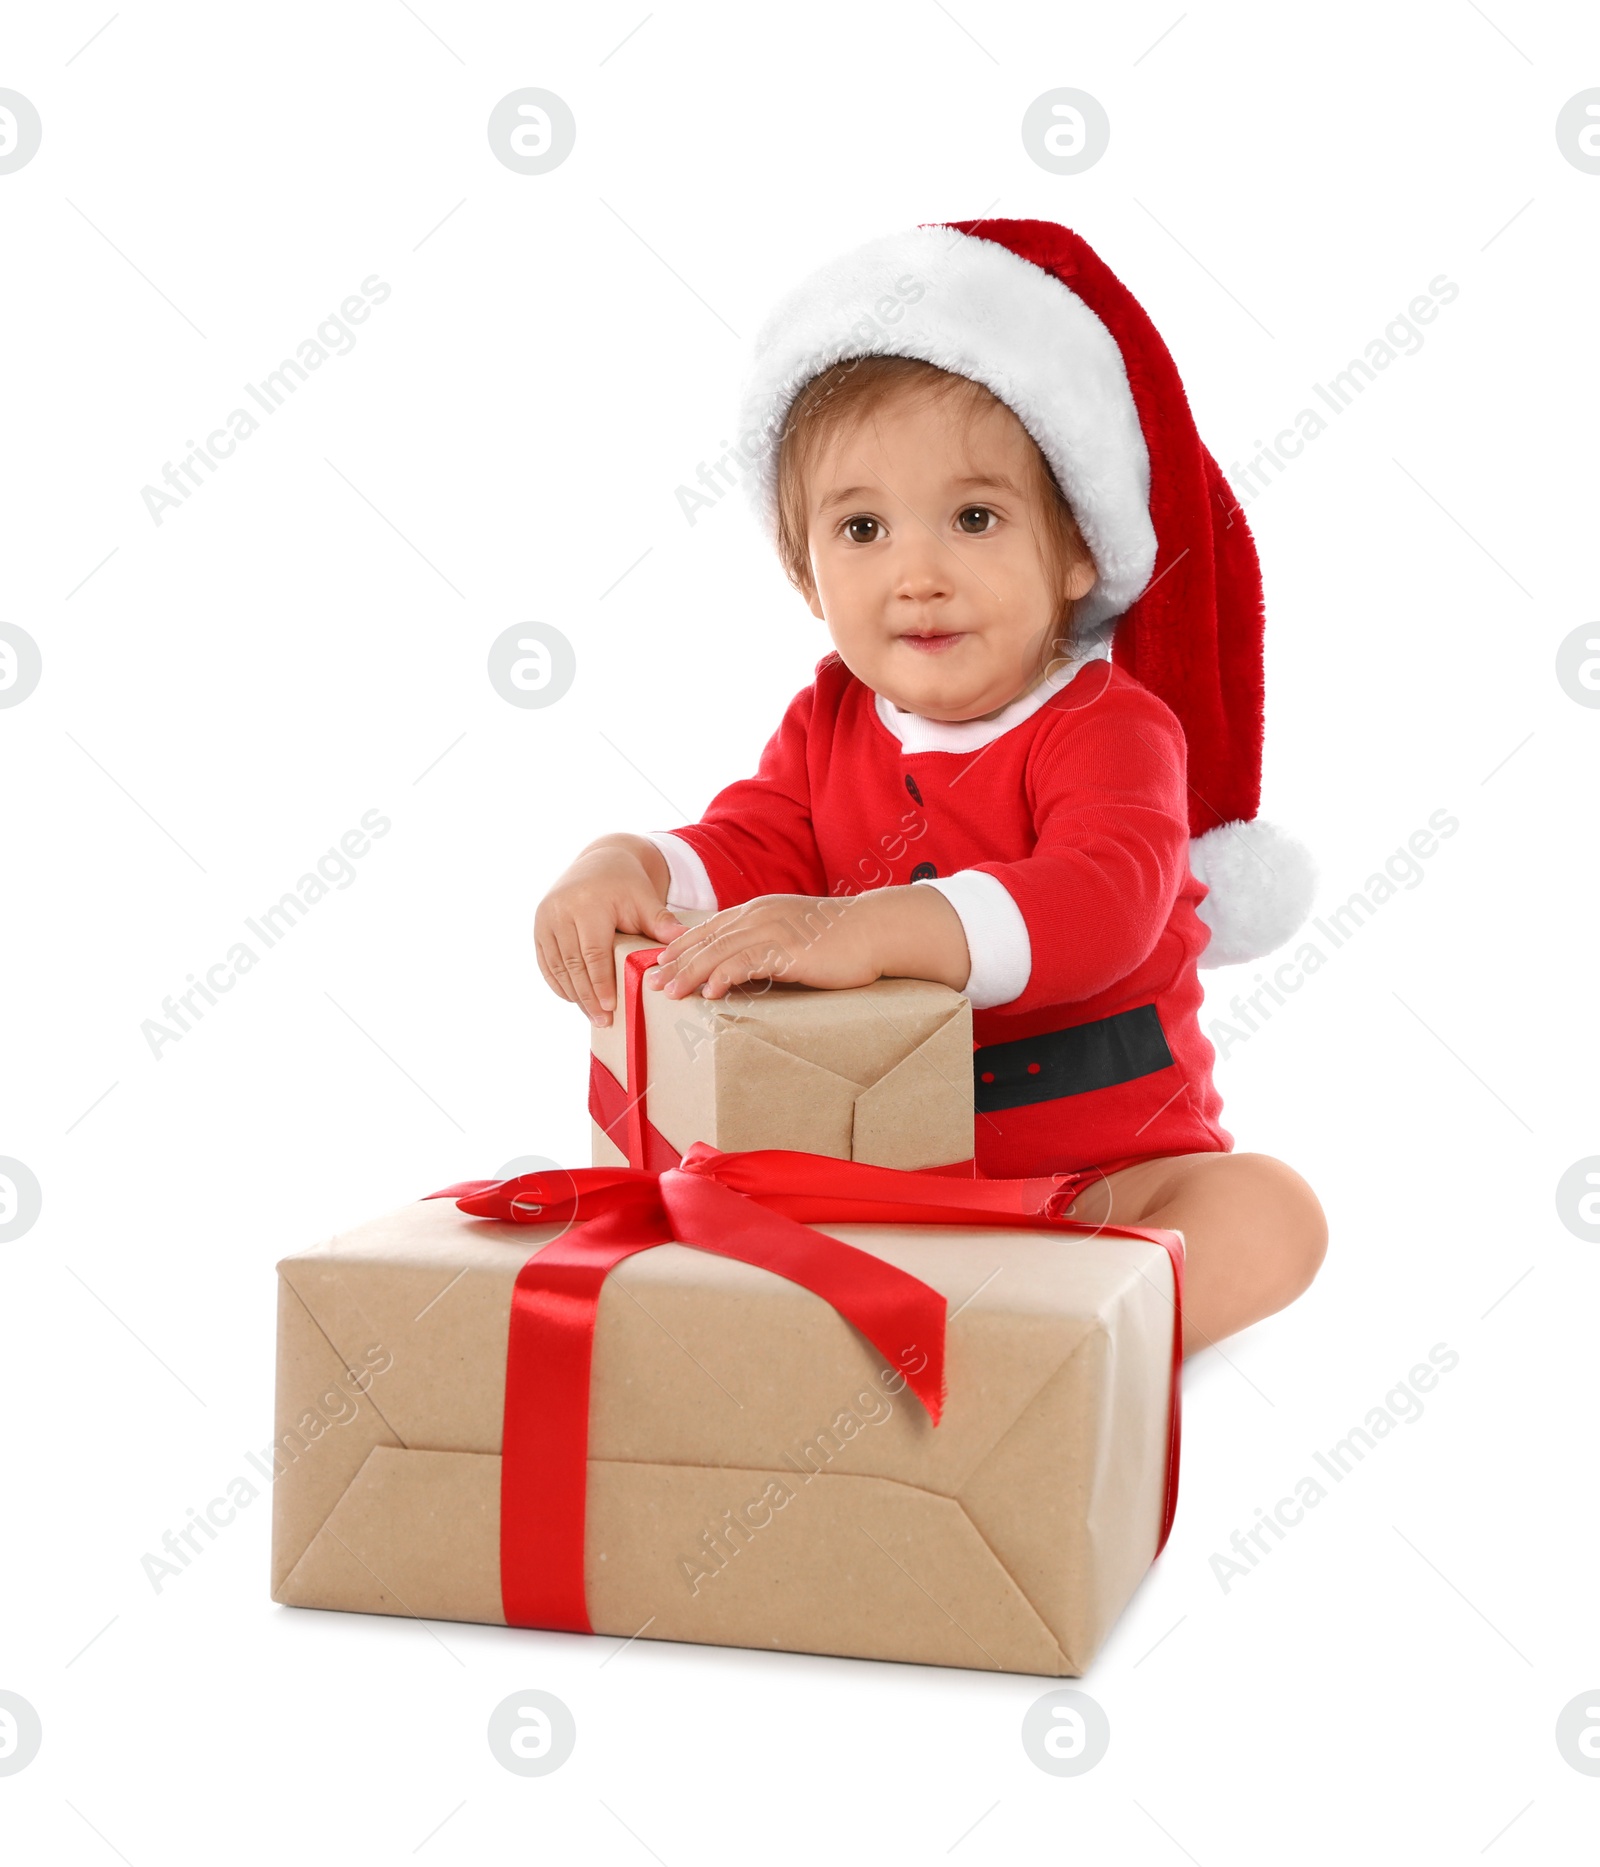 Photo of Festively dressed baby with gift boxes on white background. Christmas celebration